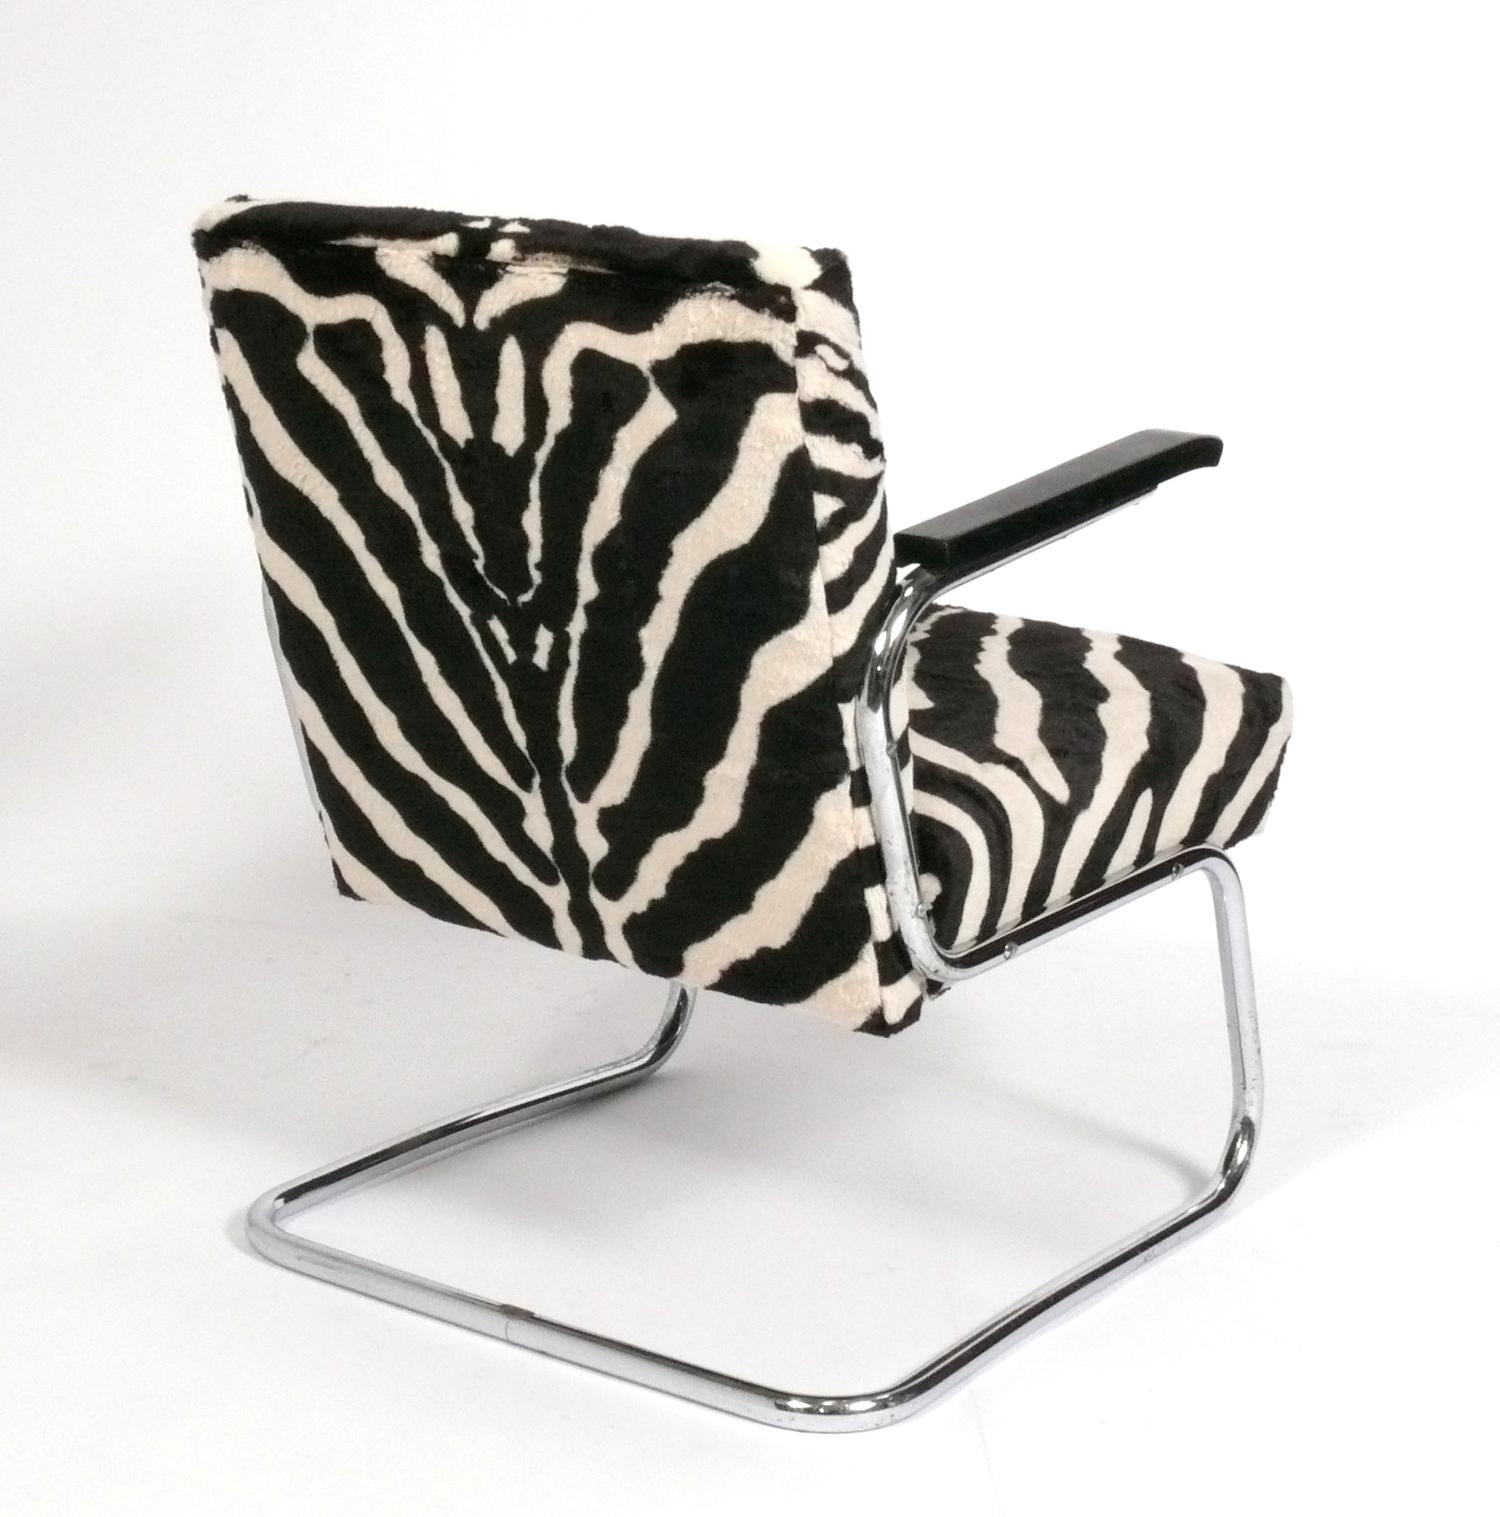 German Art Deco Bauhaus Era Chrome Lounge Chair in Zebra Print Fabric, 1930s